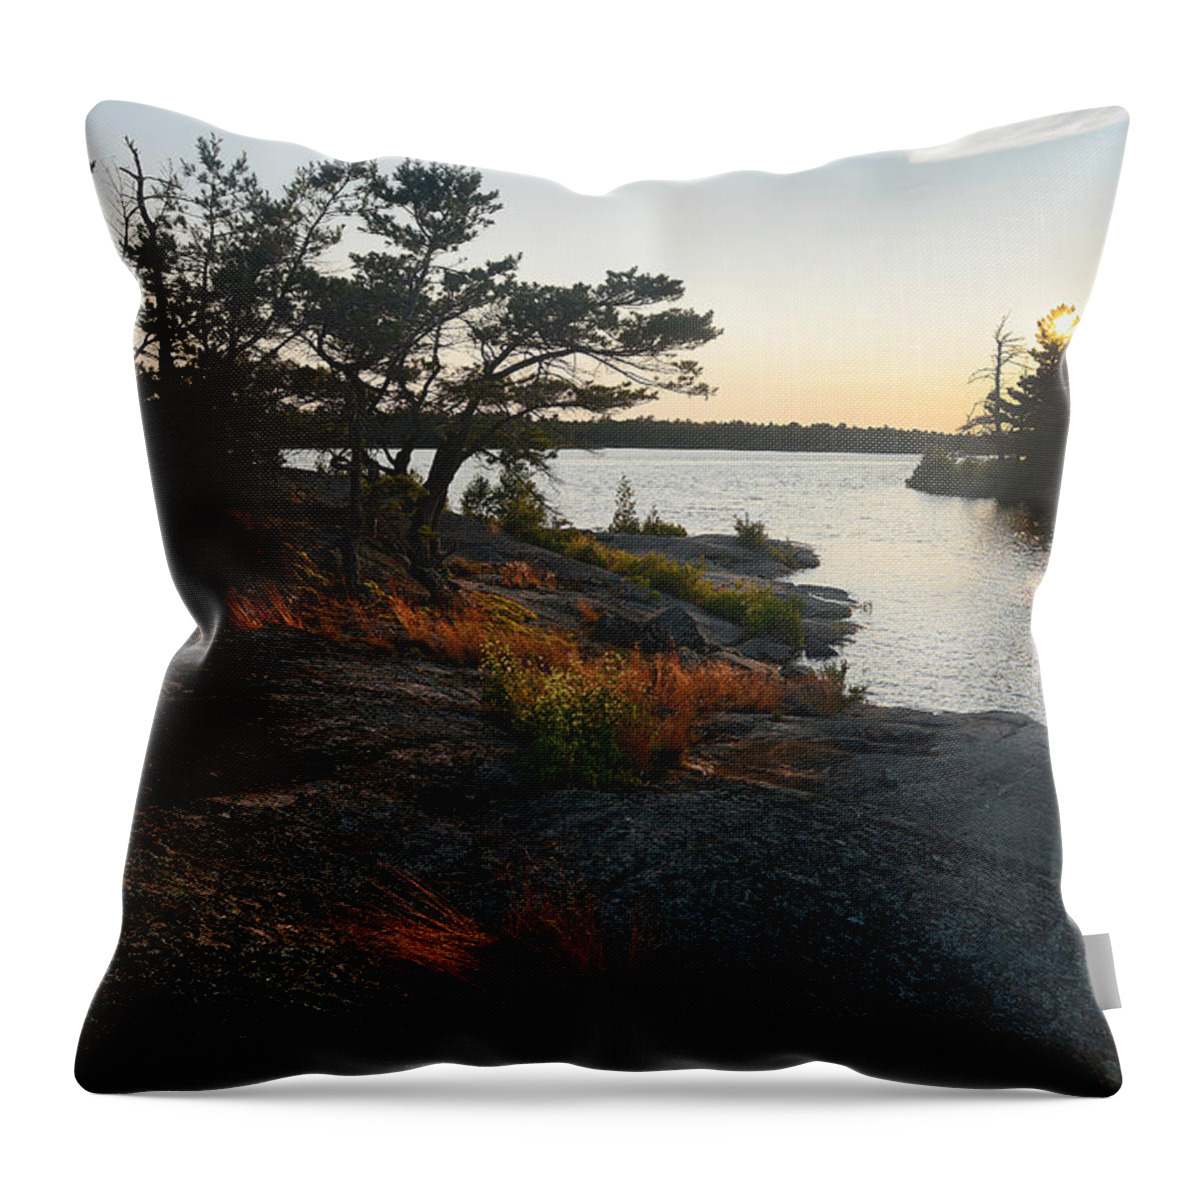 Sunset Throw Pillow featuring the photograph Hopewell Bay island rock grass by Steve Somerville